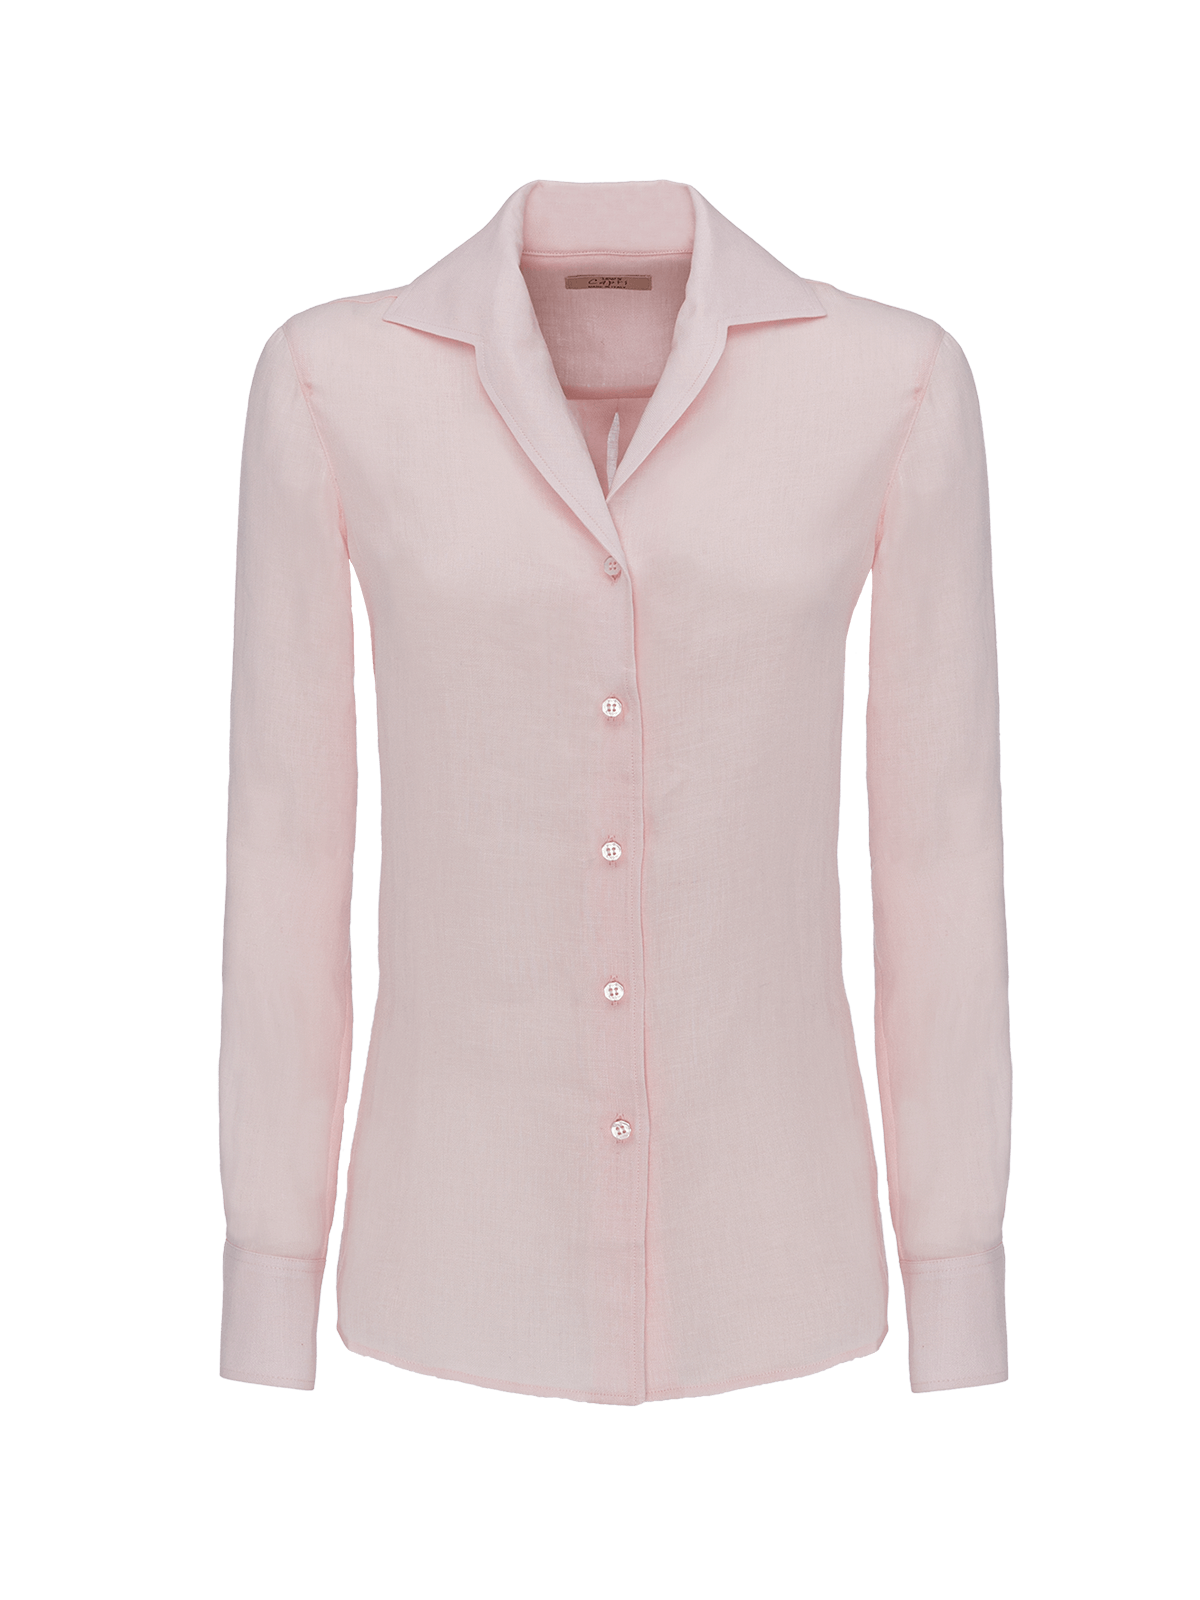 Classy linen shirt for woman 100% Capri pink shirt front